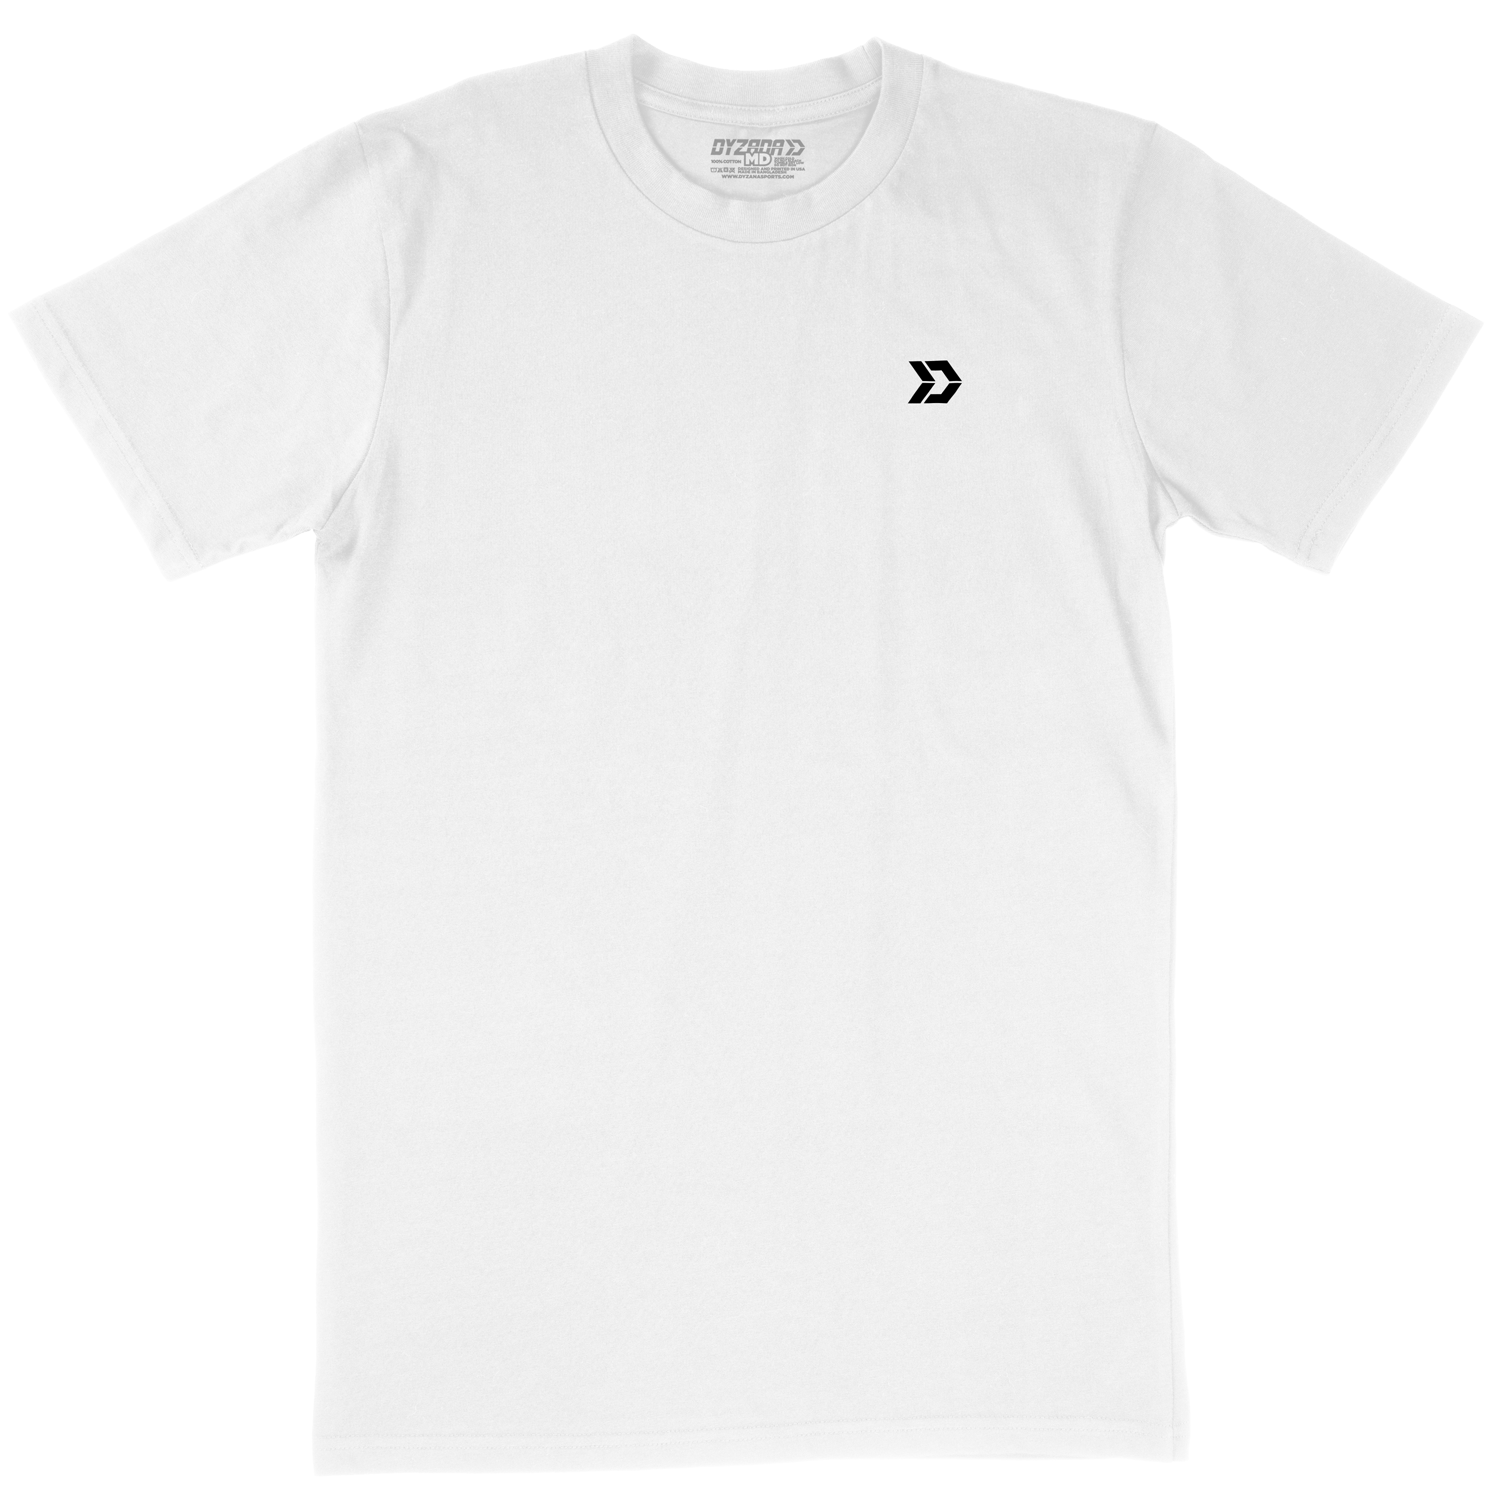 Brand T-Shirt - White